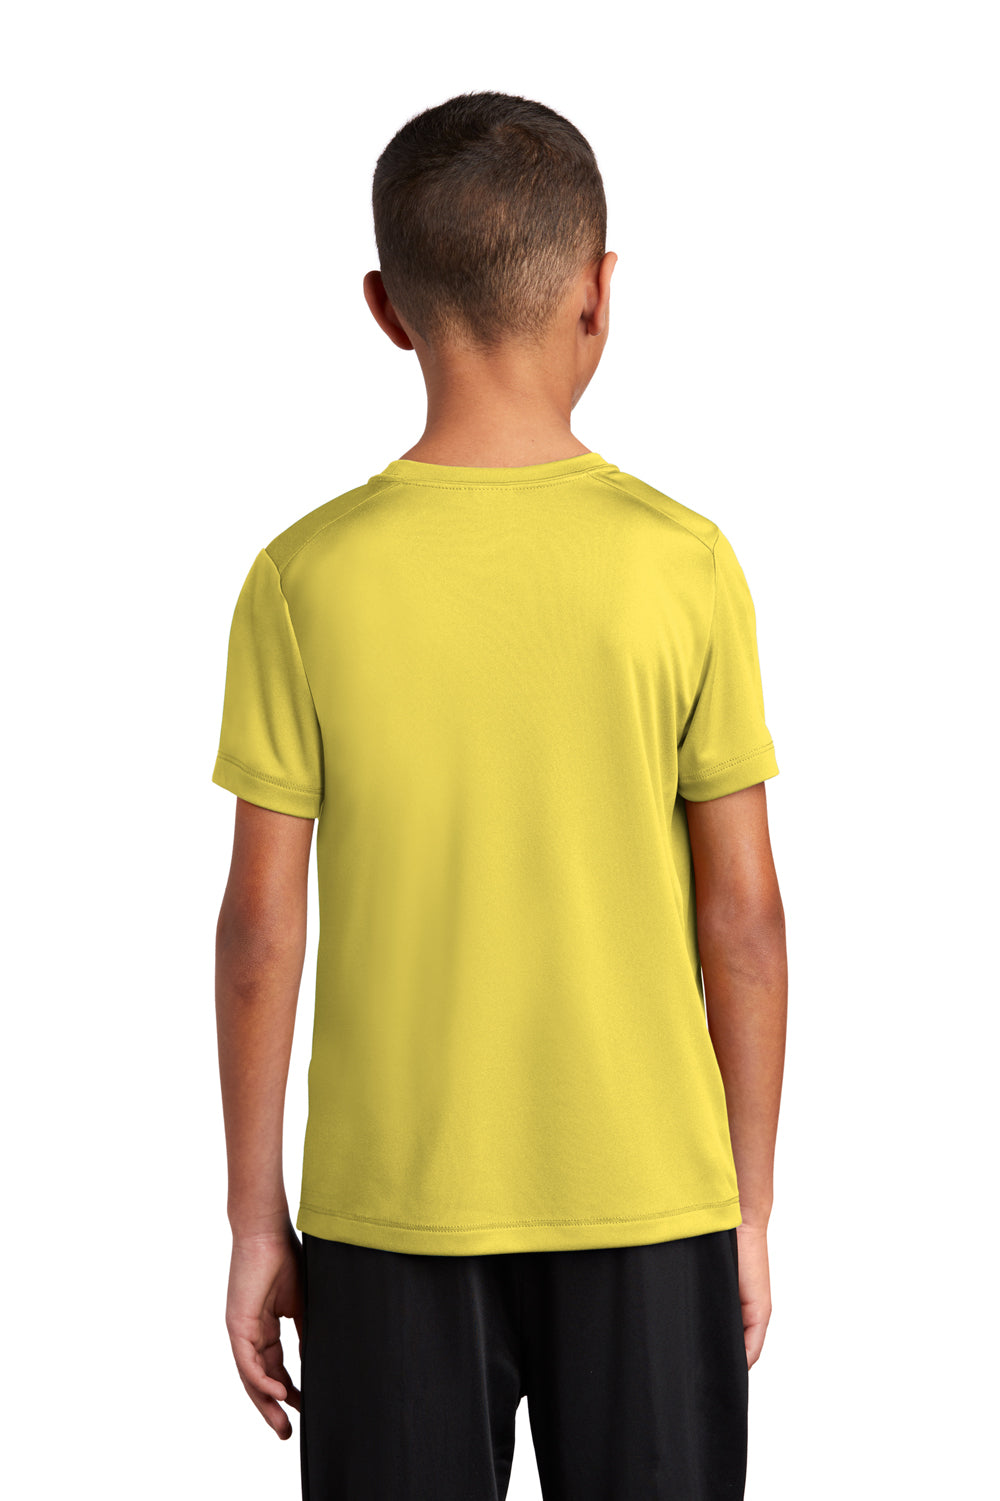 Sport-Tek Youth Short Sleeve Crewneck T-Shirt Yellow Side